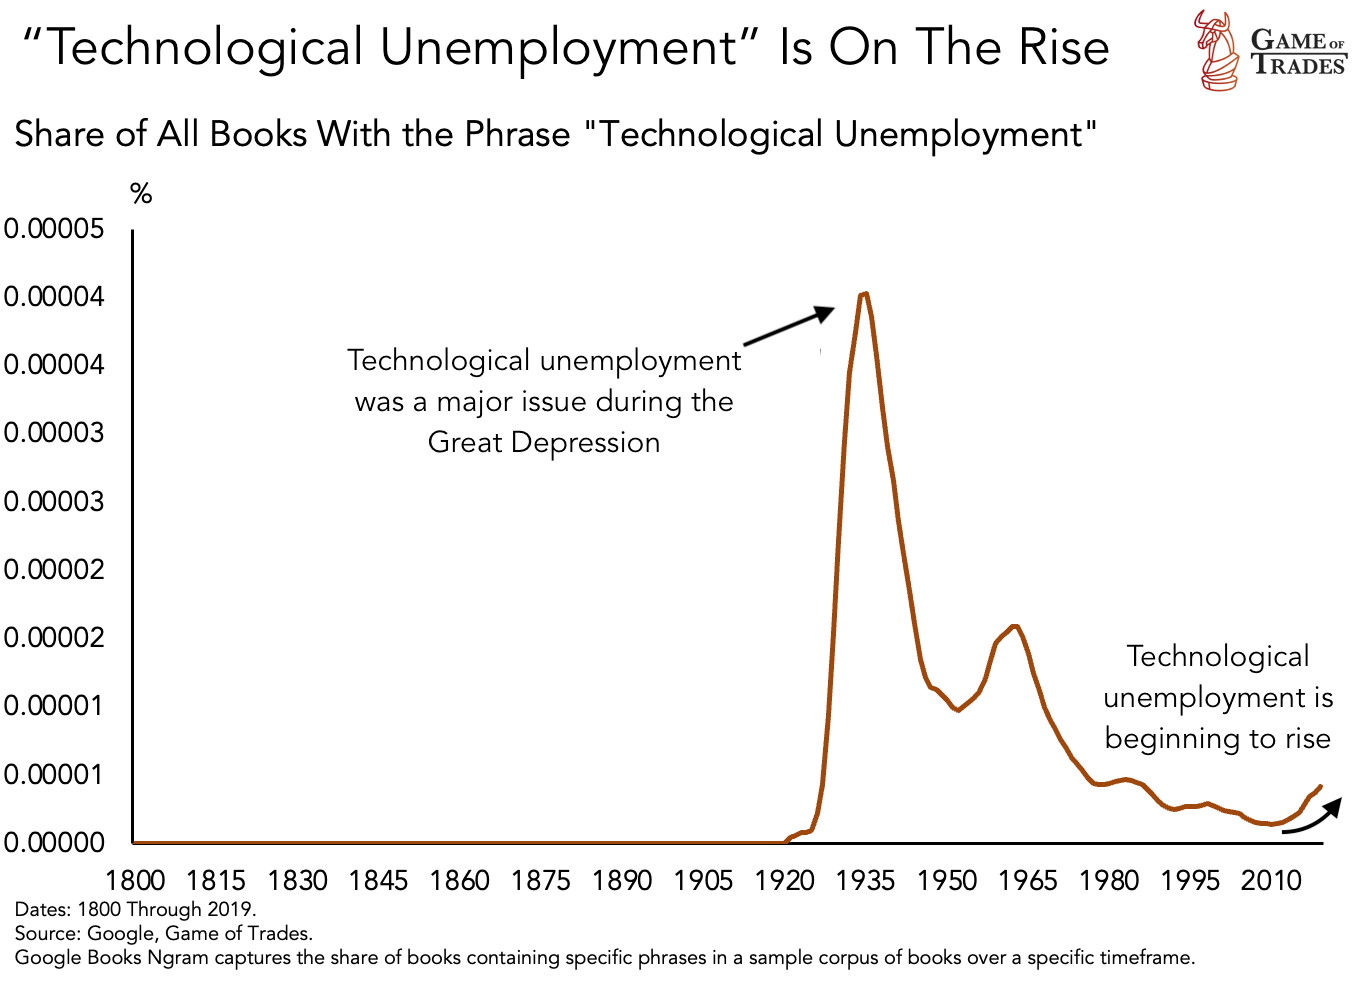 AI impact on Unemployment